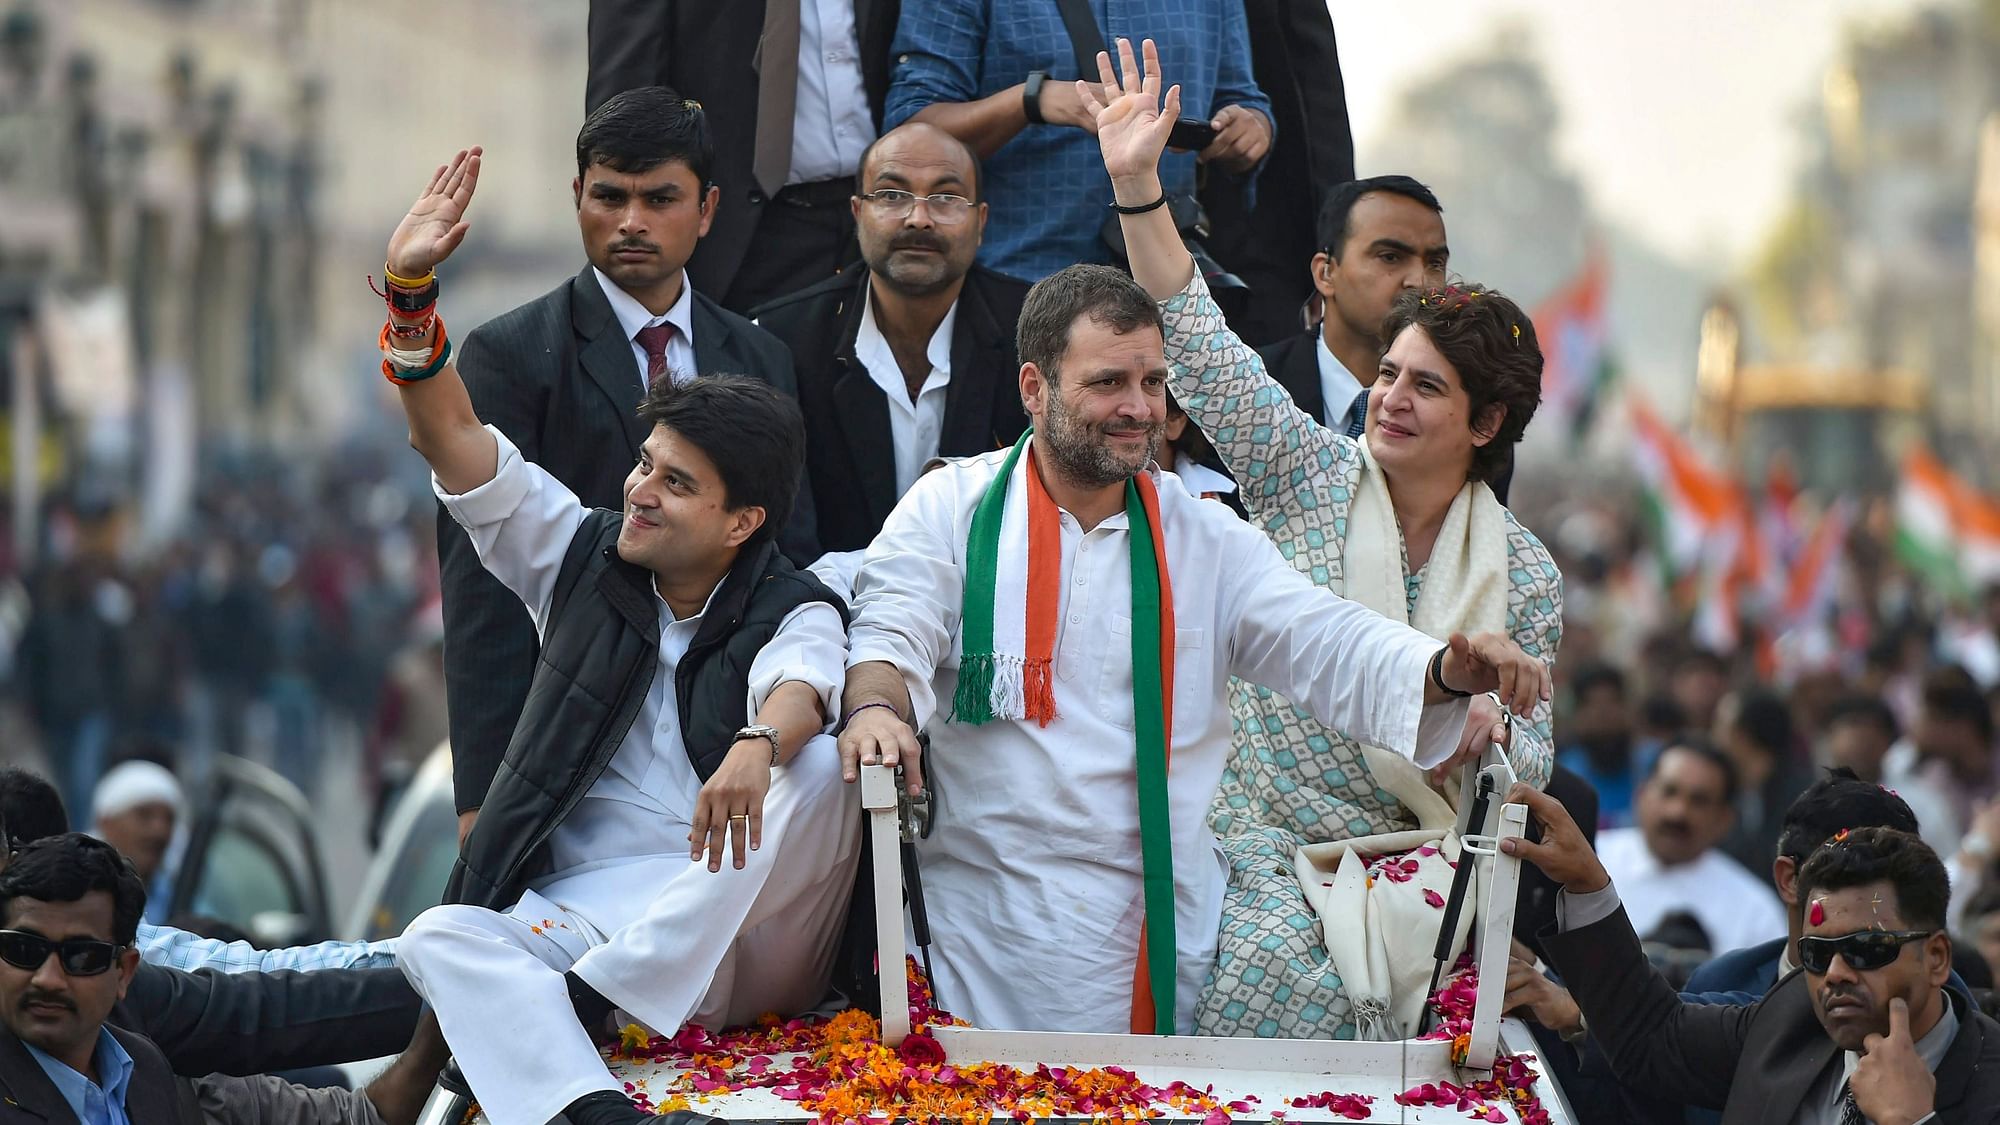 Congress President Rahul Gandhi, Priyanka Gandhi and Jyotiraditya Scindia at Congress roadshow in Lucknow.